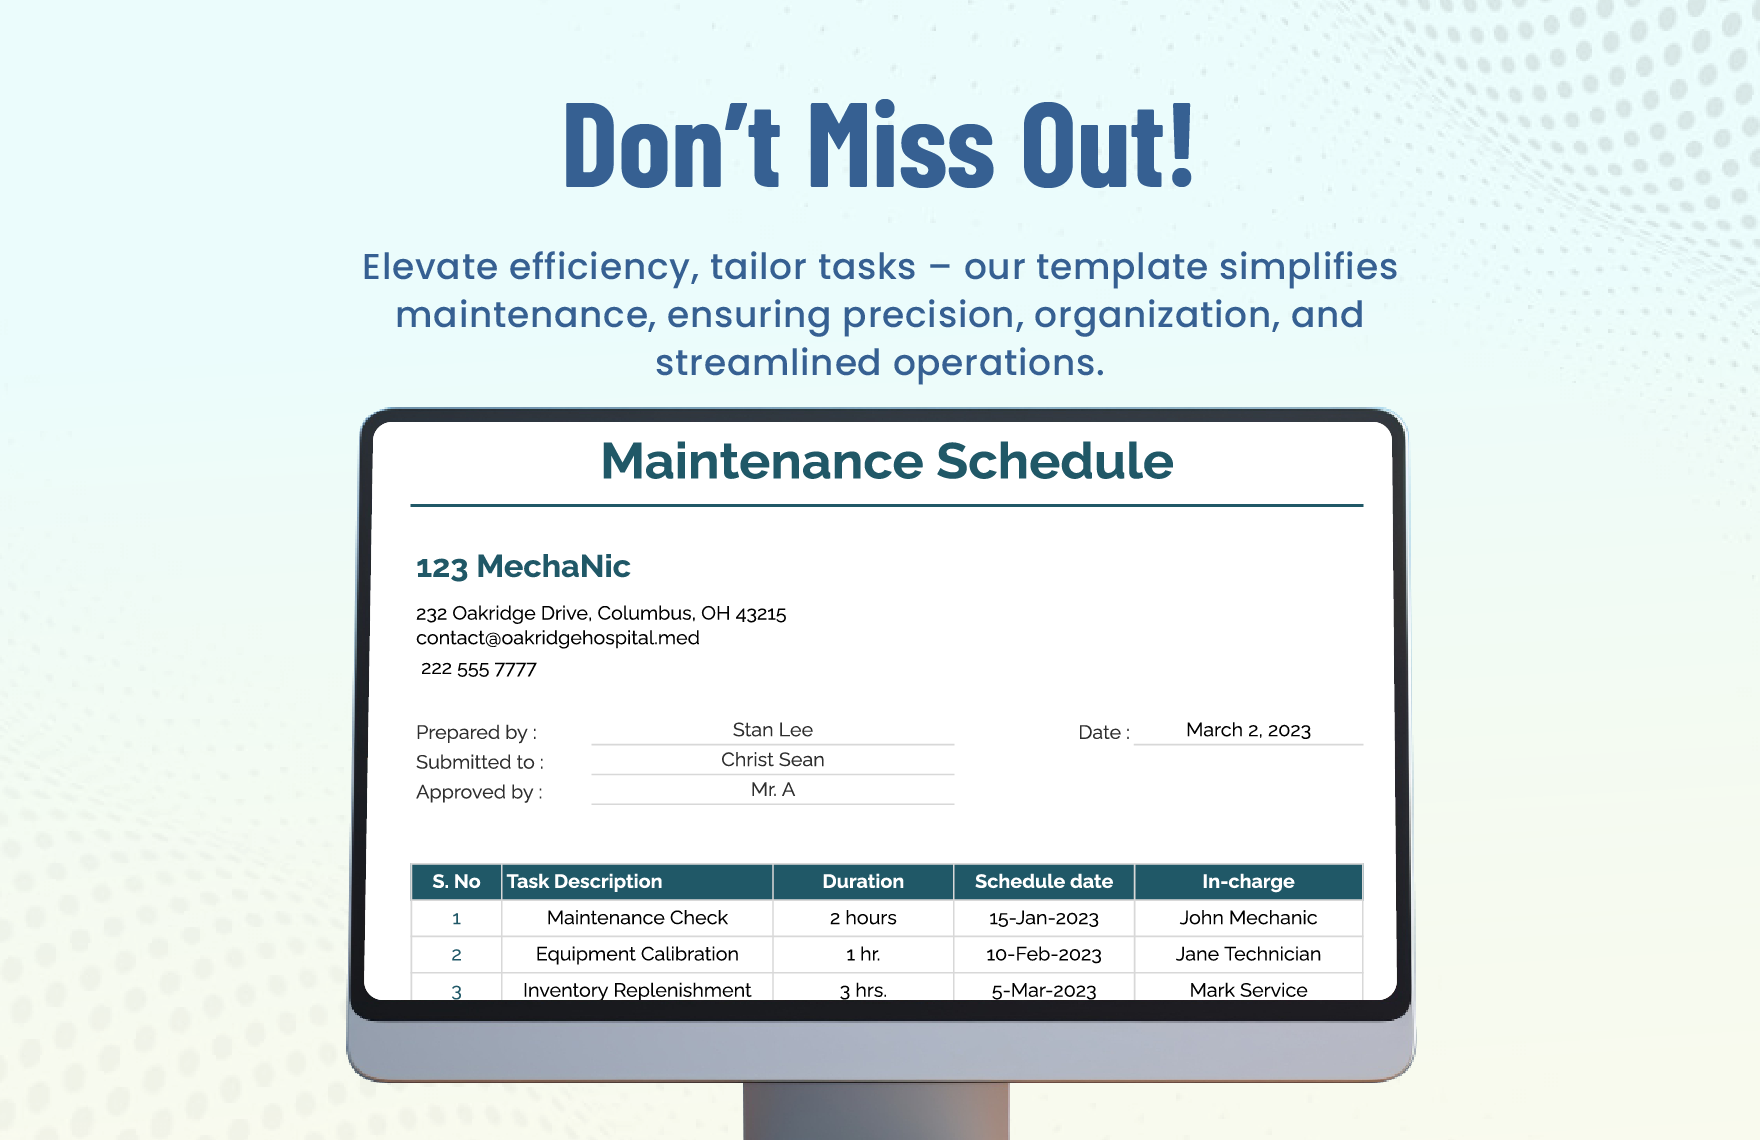 Sample Maintenance Schedule Template